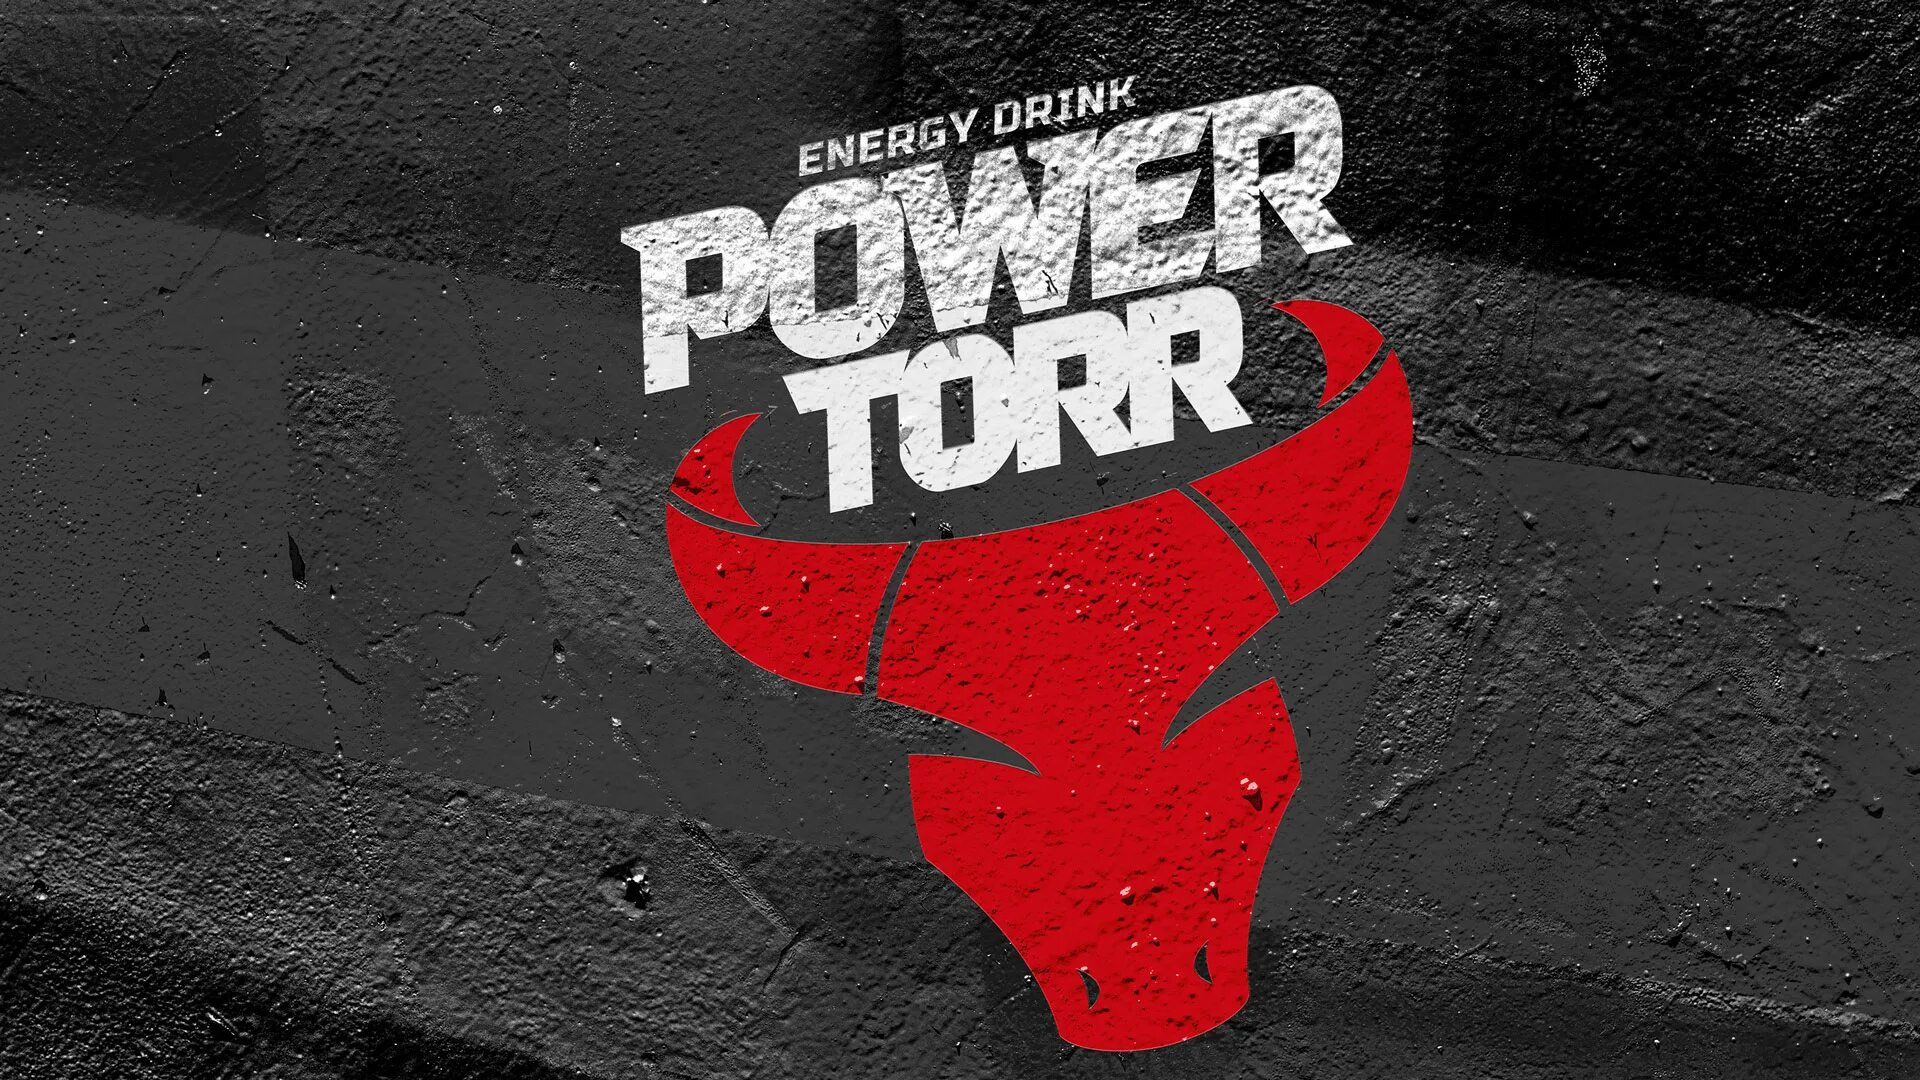 Картинка повер. Power Torr логотип. Логотип Энергетика повер Торр. Повер Торр 1. Повер тор нави.